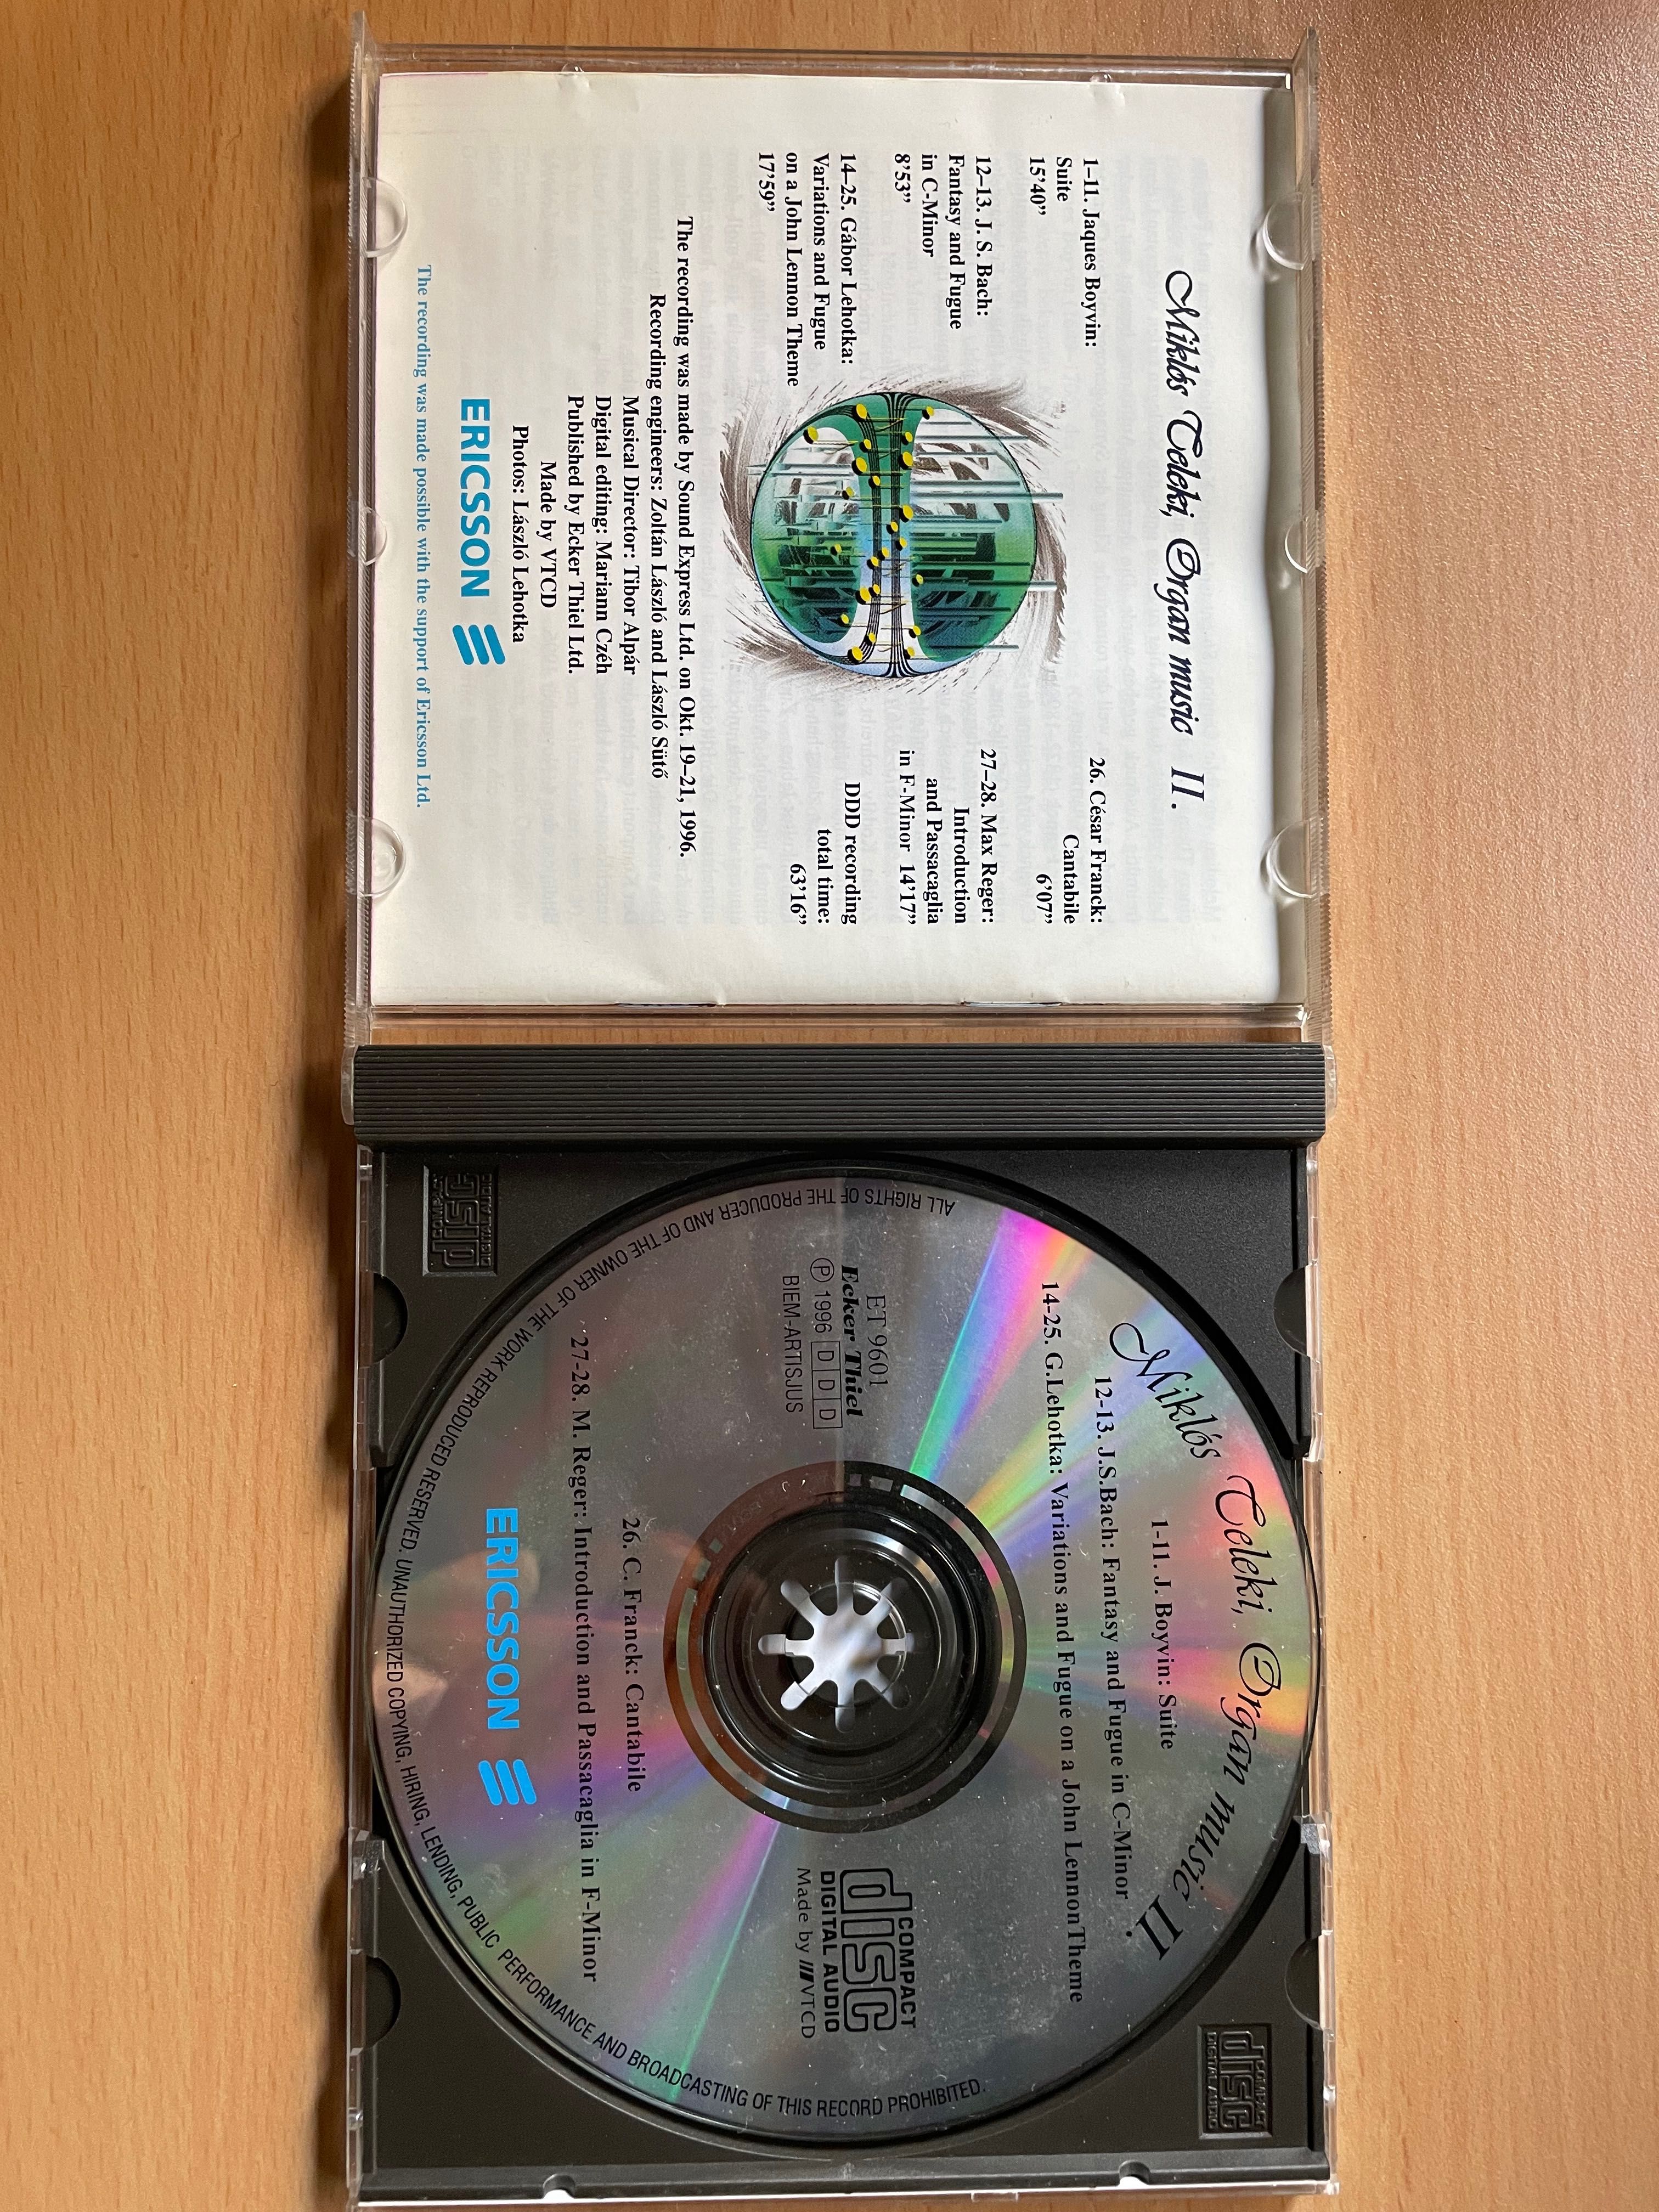 CD Miklós Teleki (Lehotka (John Lennon), etc) Organ Music II